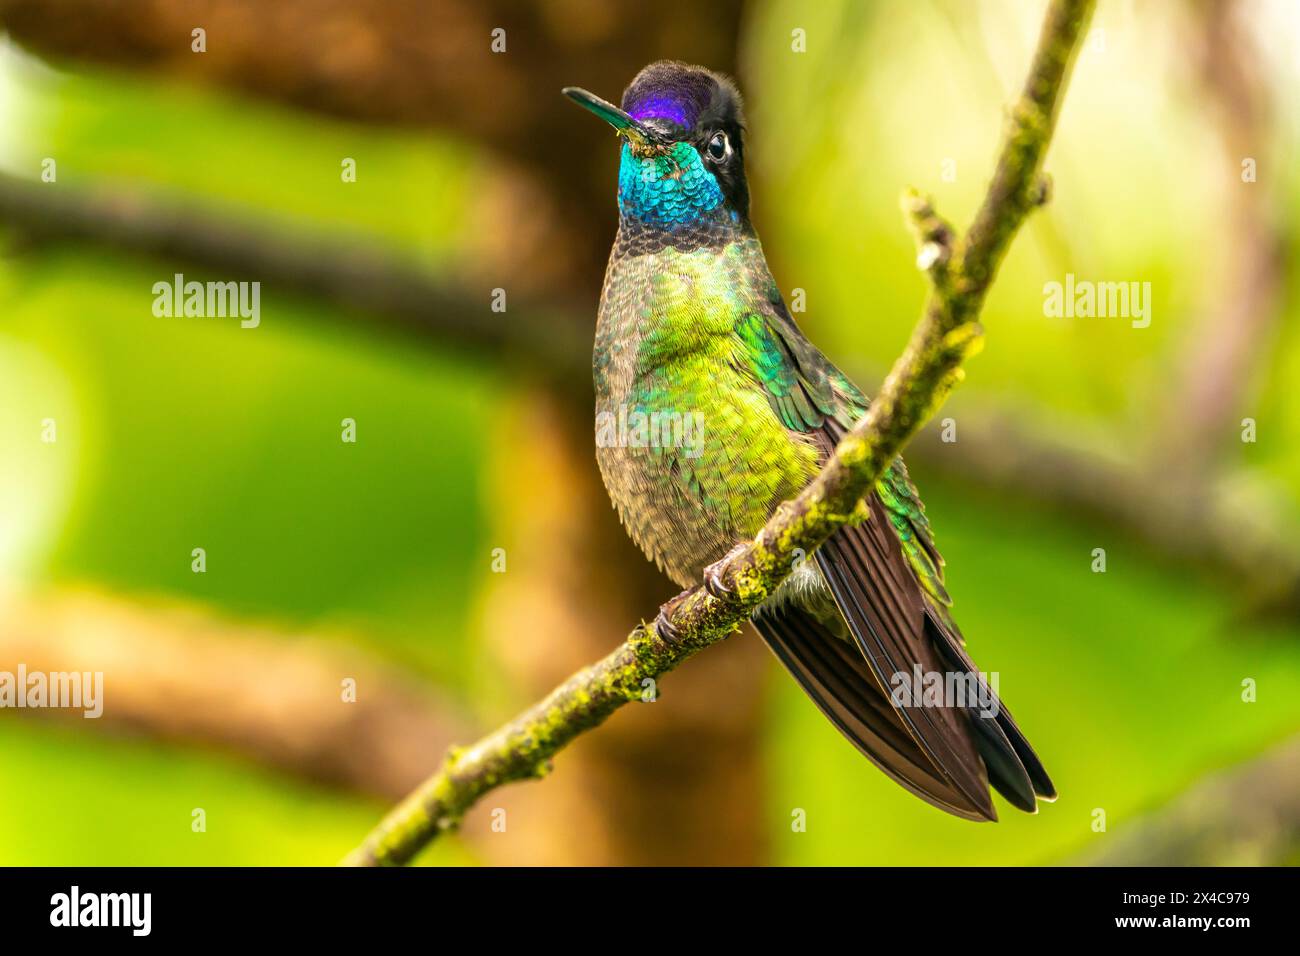 Costa Rica, Cordillera de Talamanca. Talamanca hummingbird close-up. Stock Photo